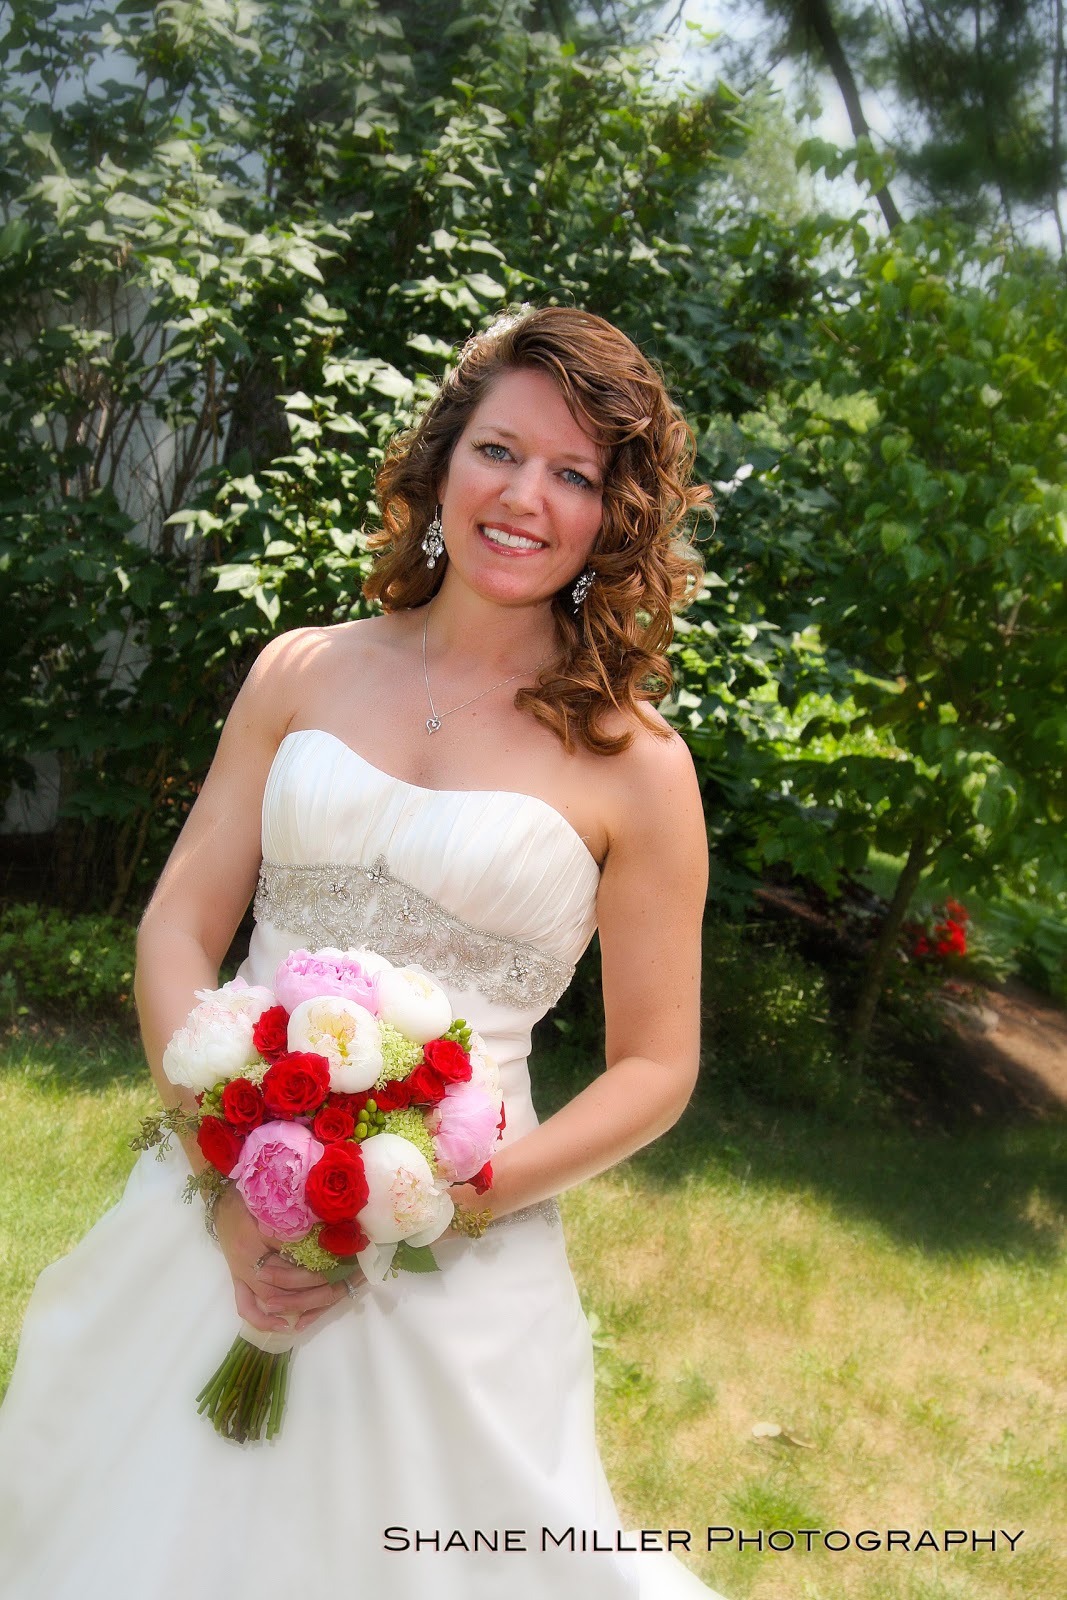 Weddings with Pealer's Flowers: October 2010